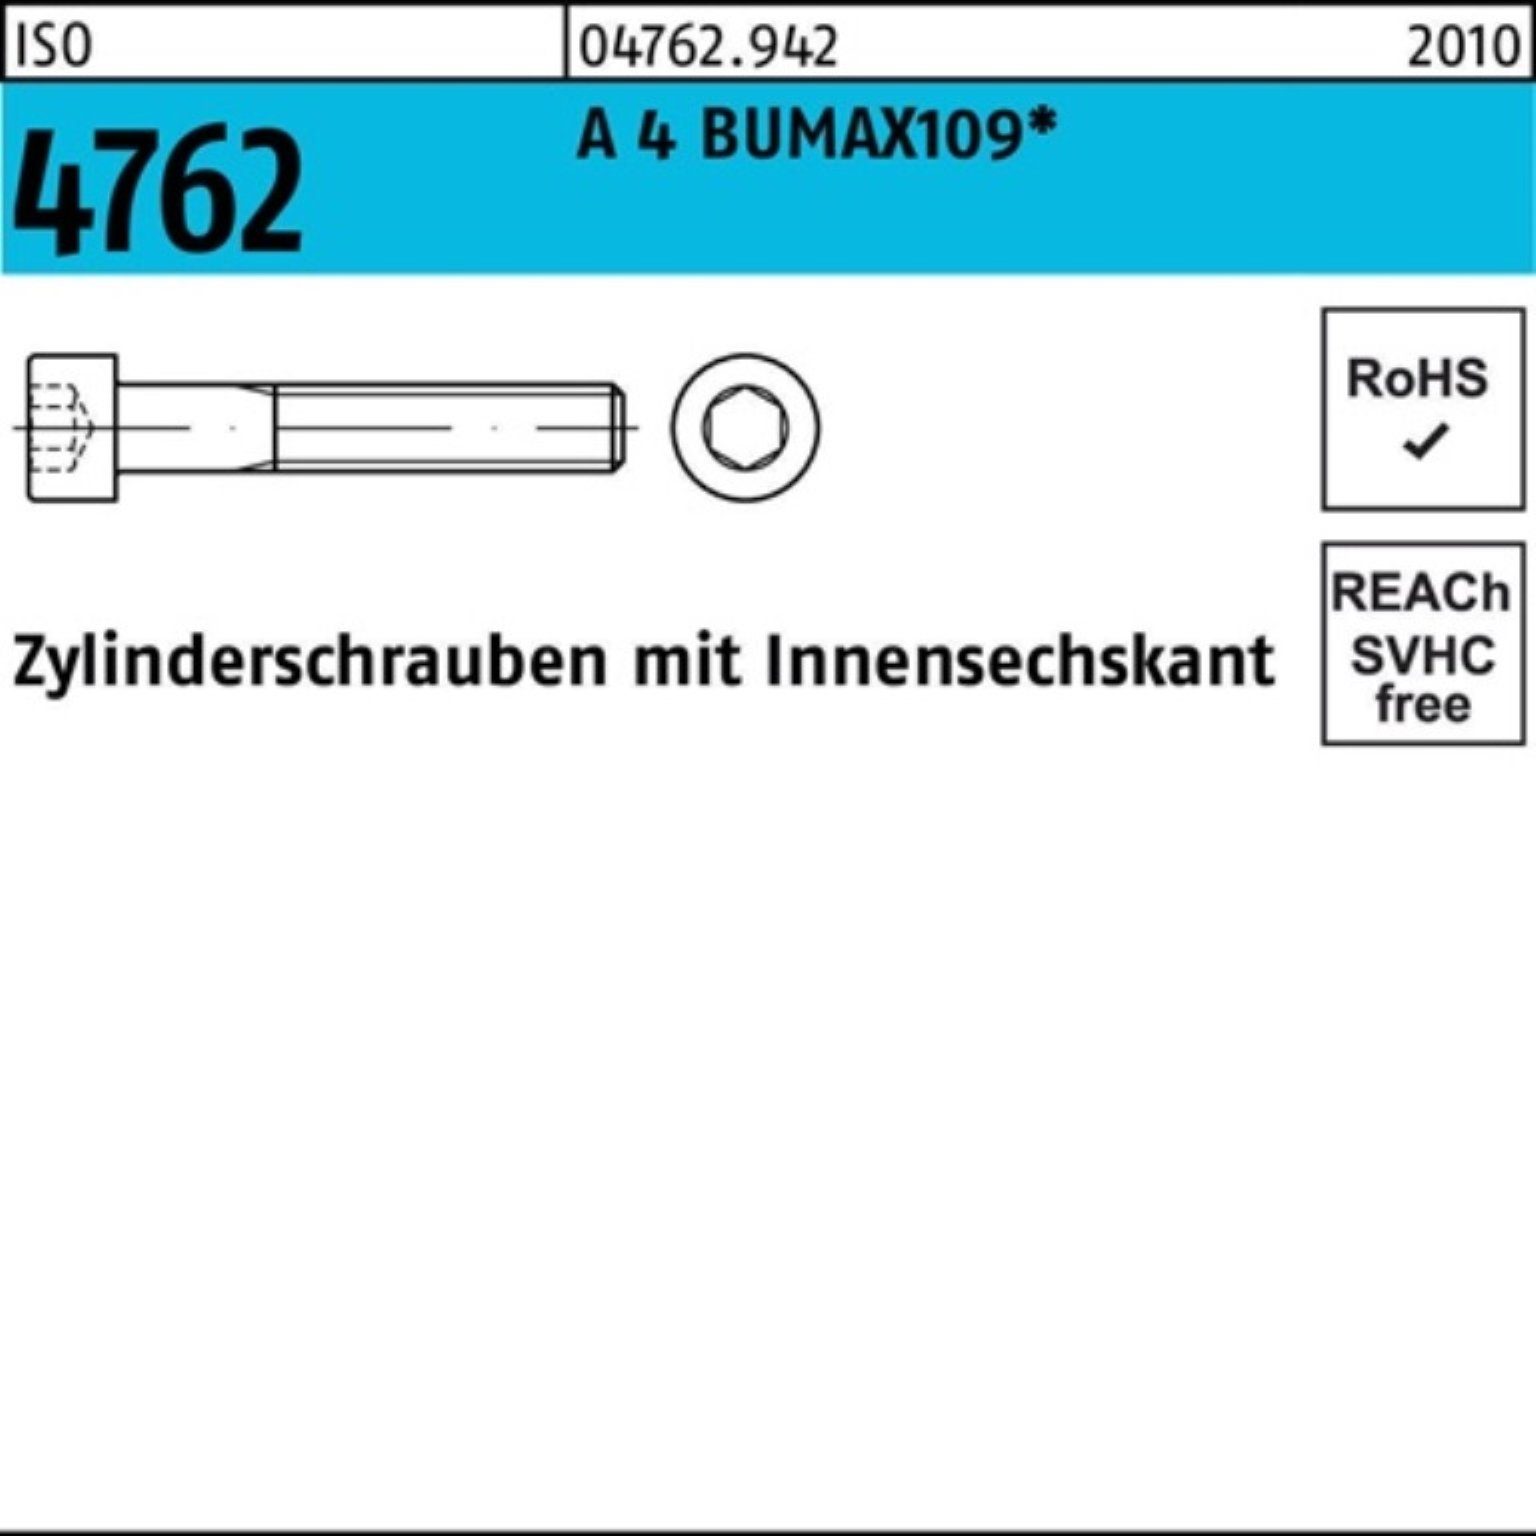 Bufab Zylinderschraube 100er Pack Zylinderschraube ISO 4762 Innen-6kt M16x 40 A 4 BUMAX109 25